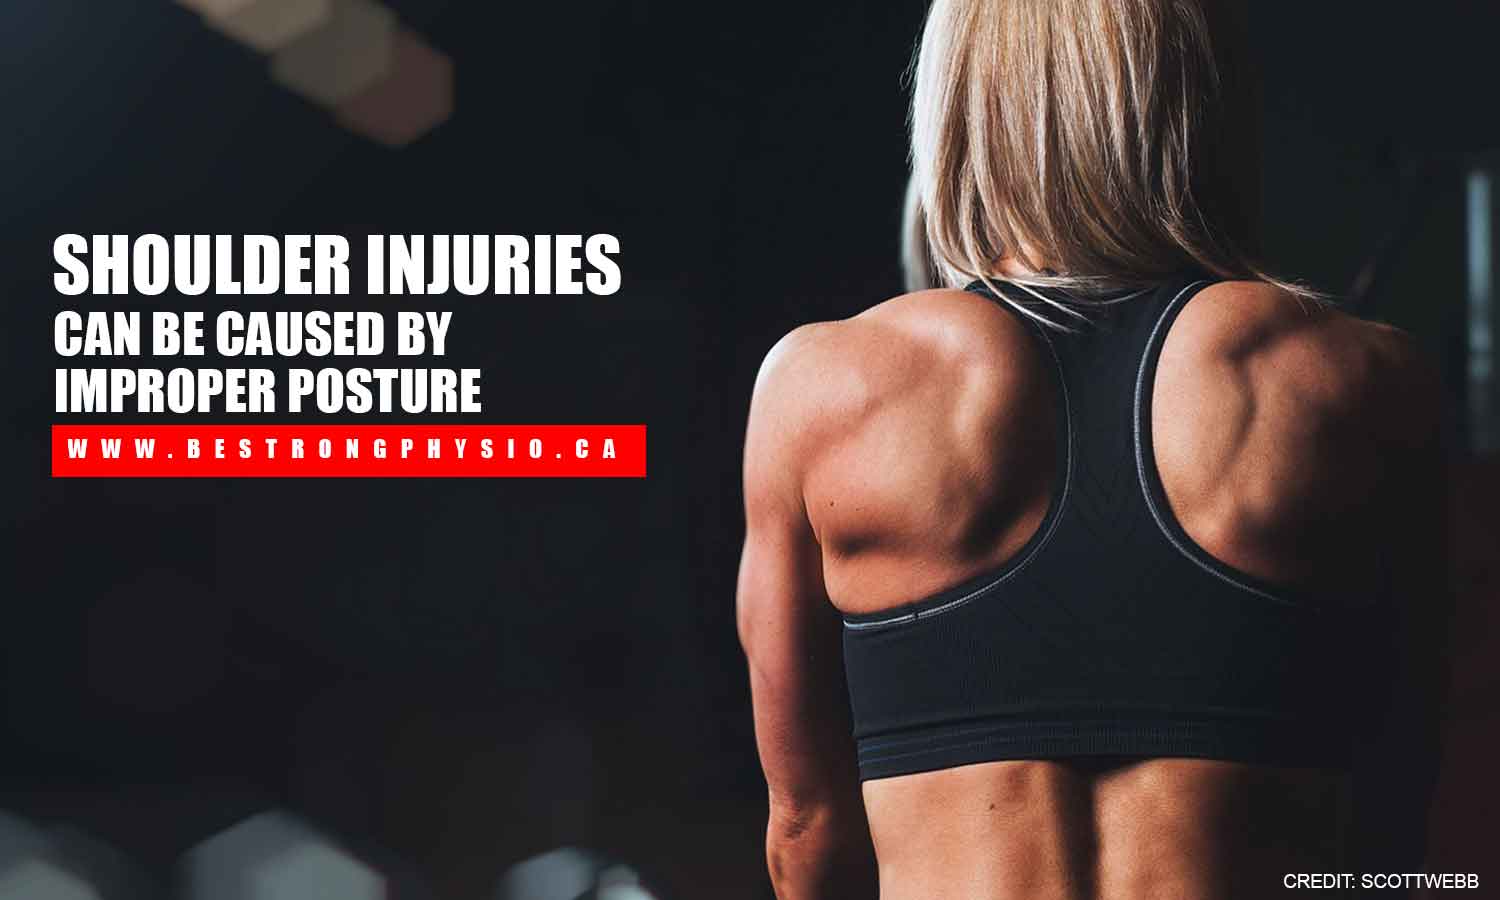 shoulder injuries